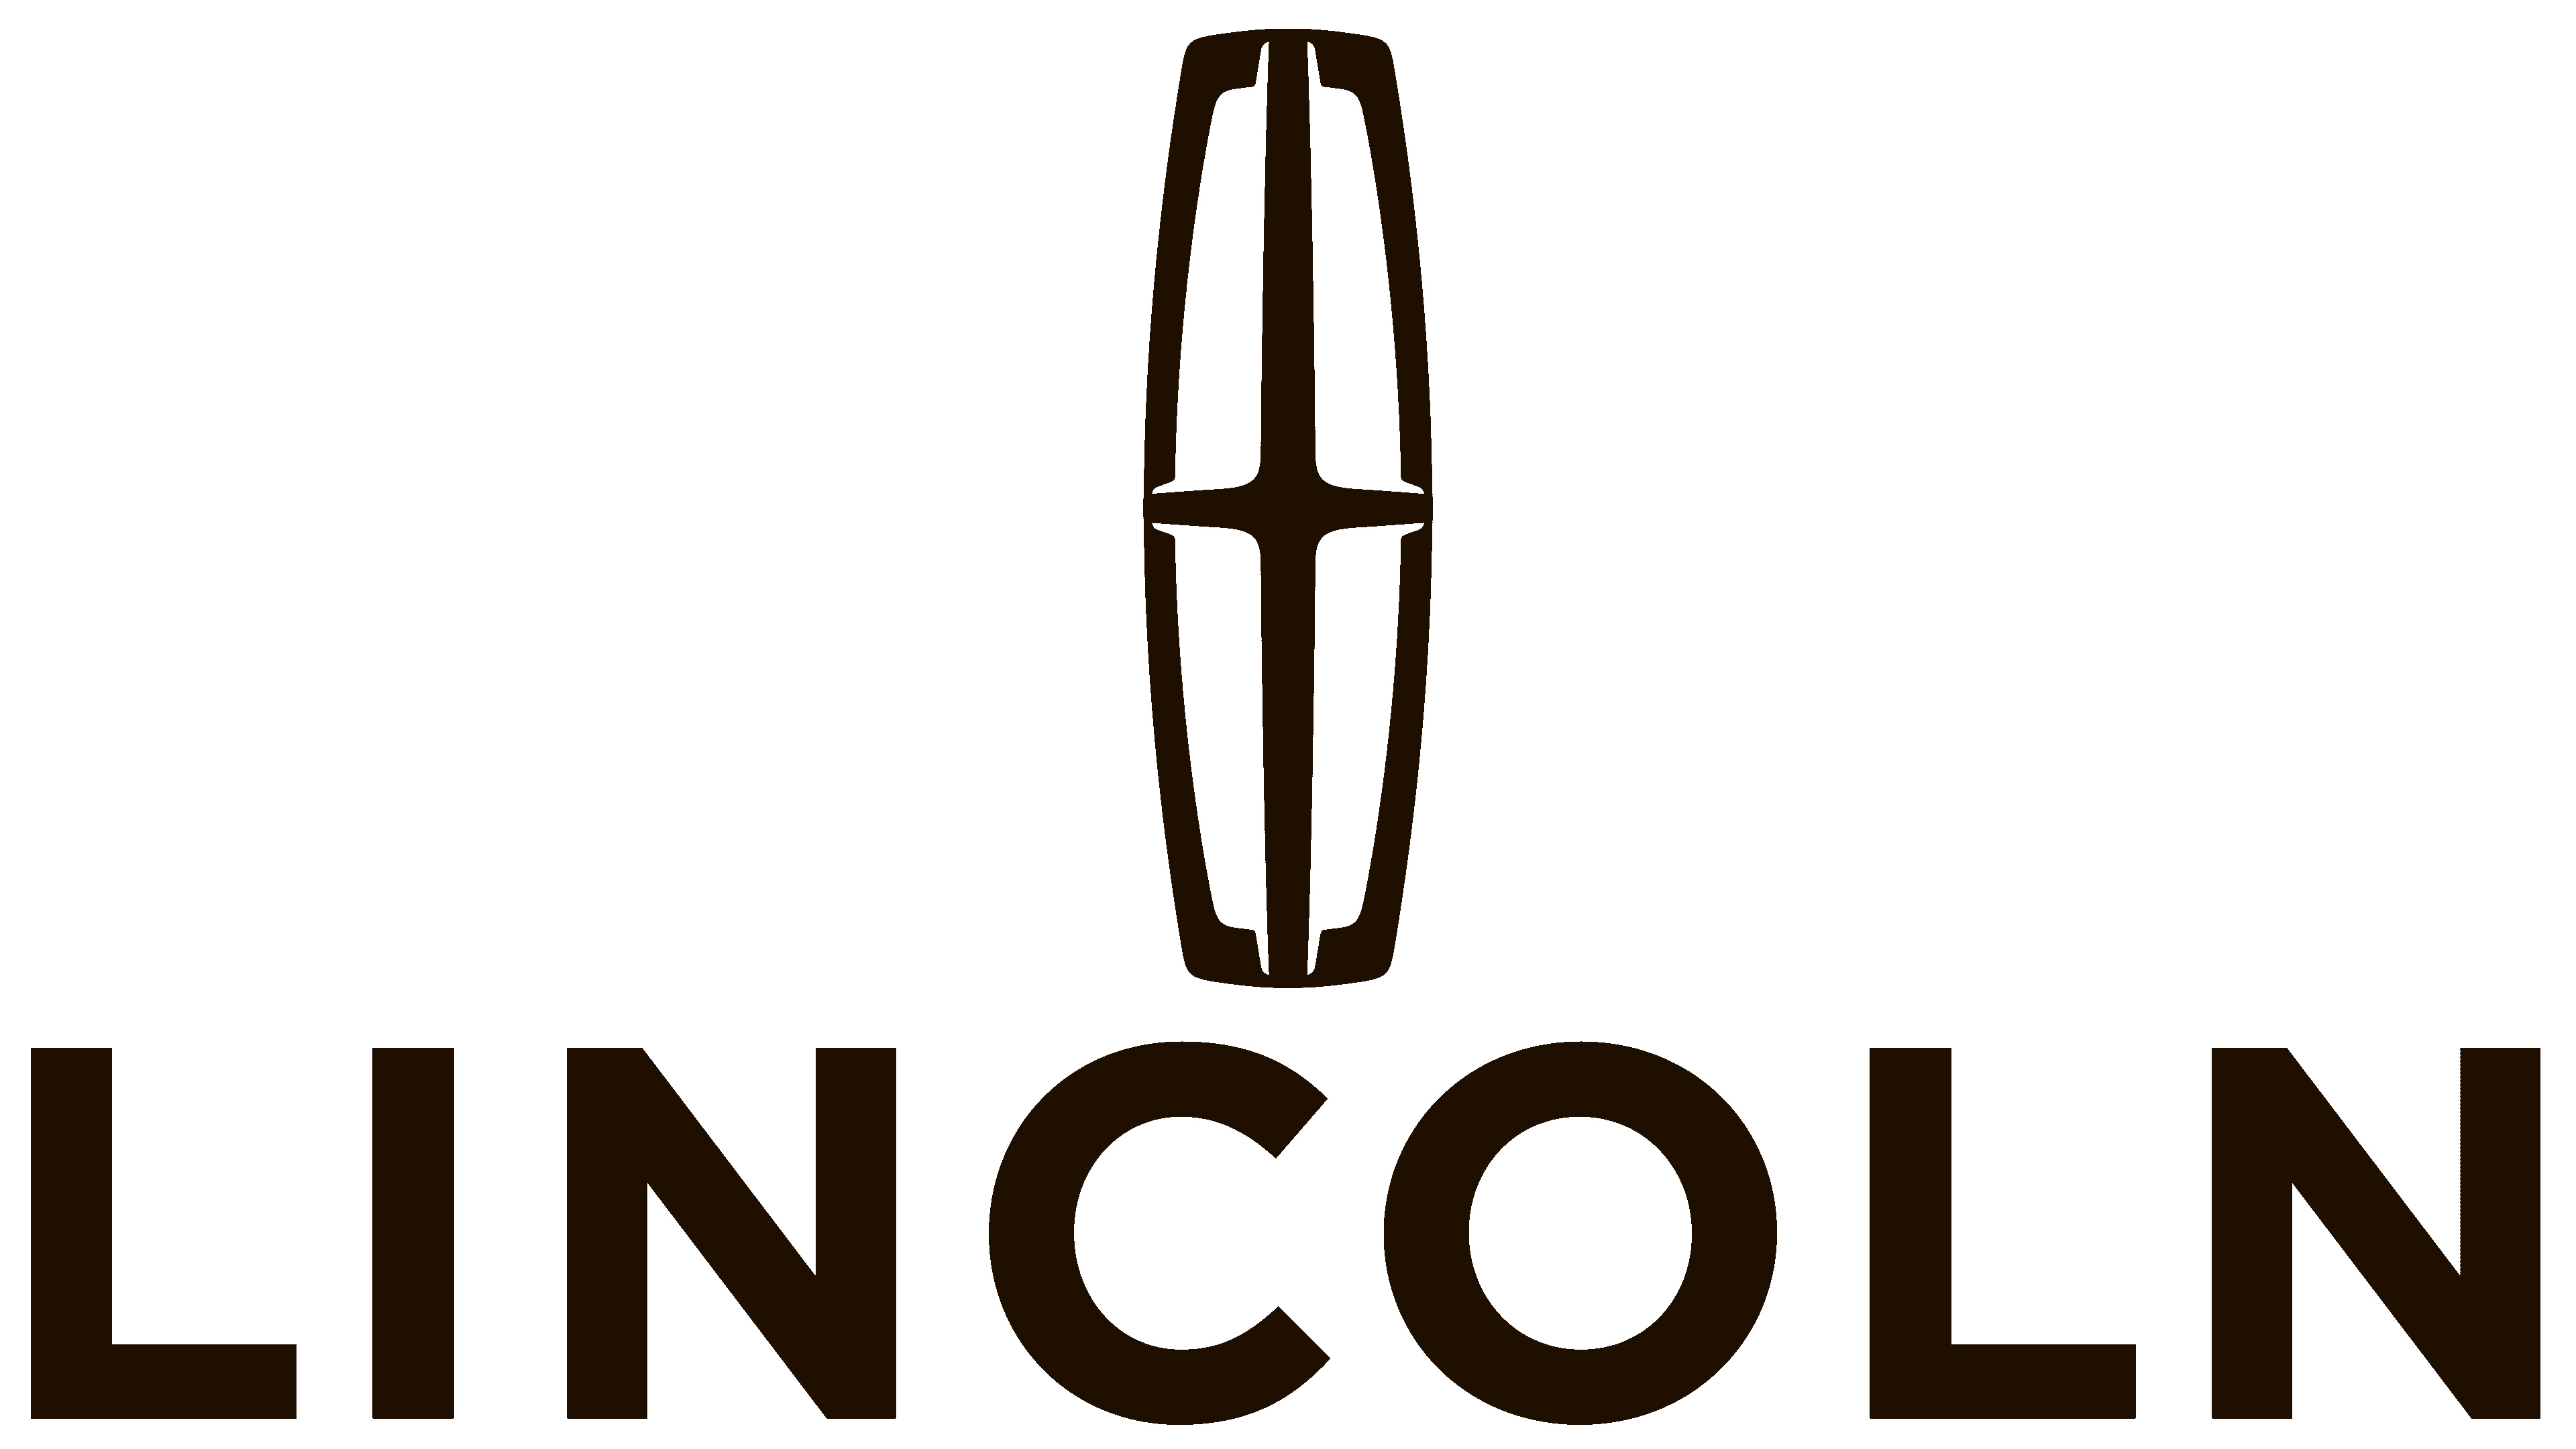 Lincoln Car, Logo and symbol meaning, 3840x2160 4K Desktop